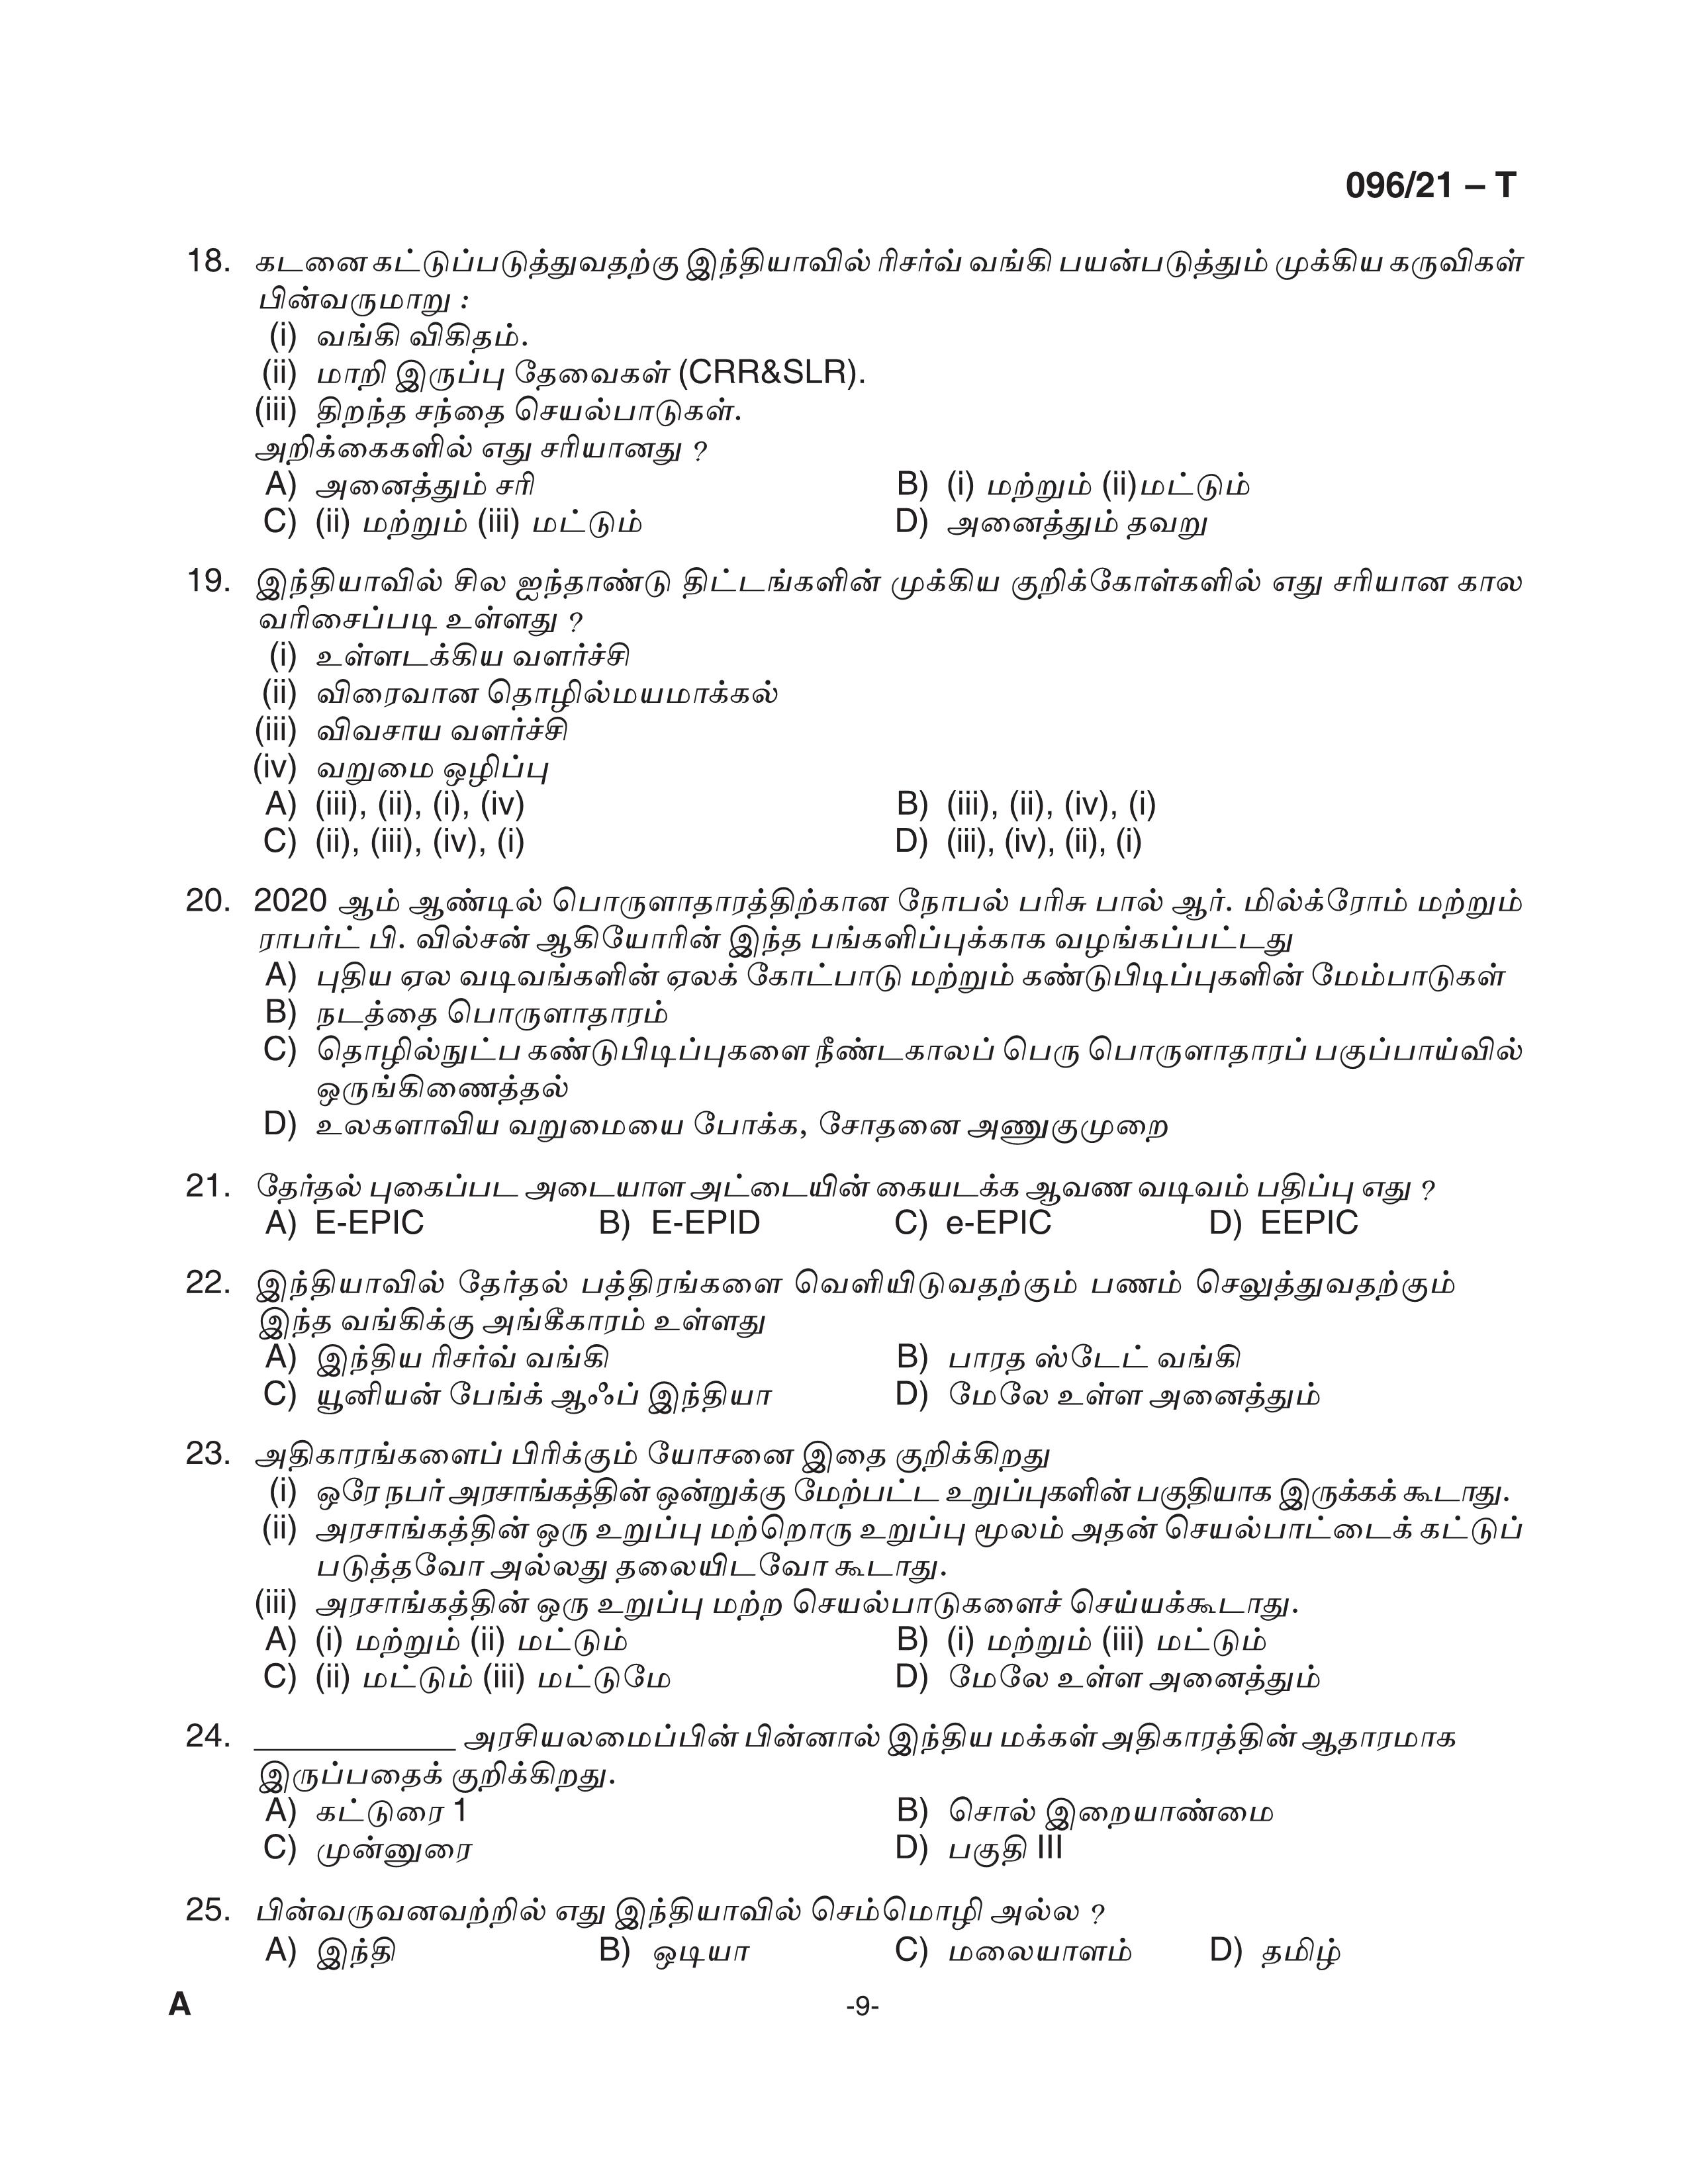 KPSC Degree Level Preliminary Exam Stage II Tamil Exam 2021 Code 09621 T 9